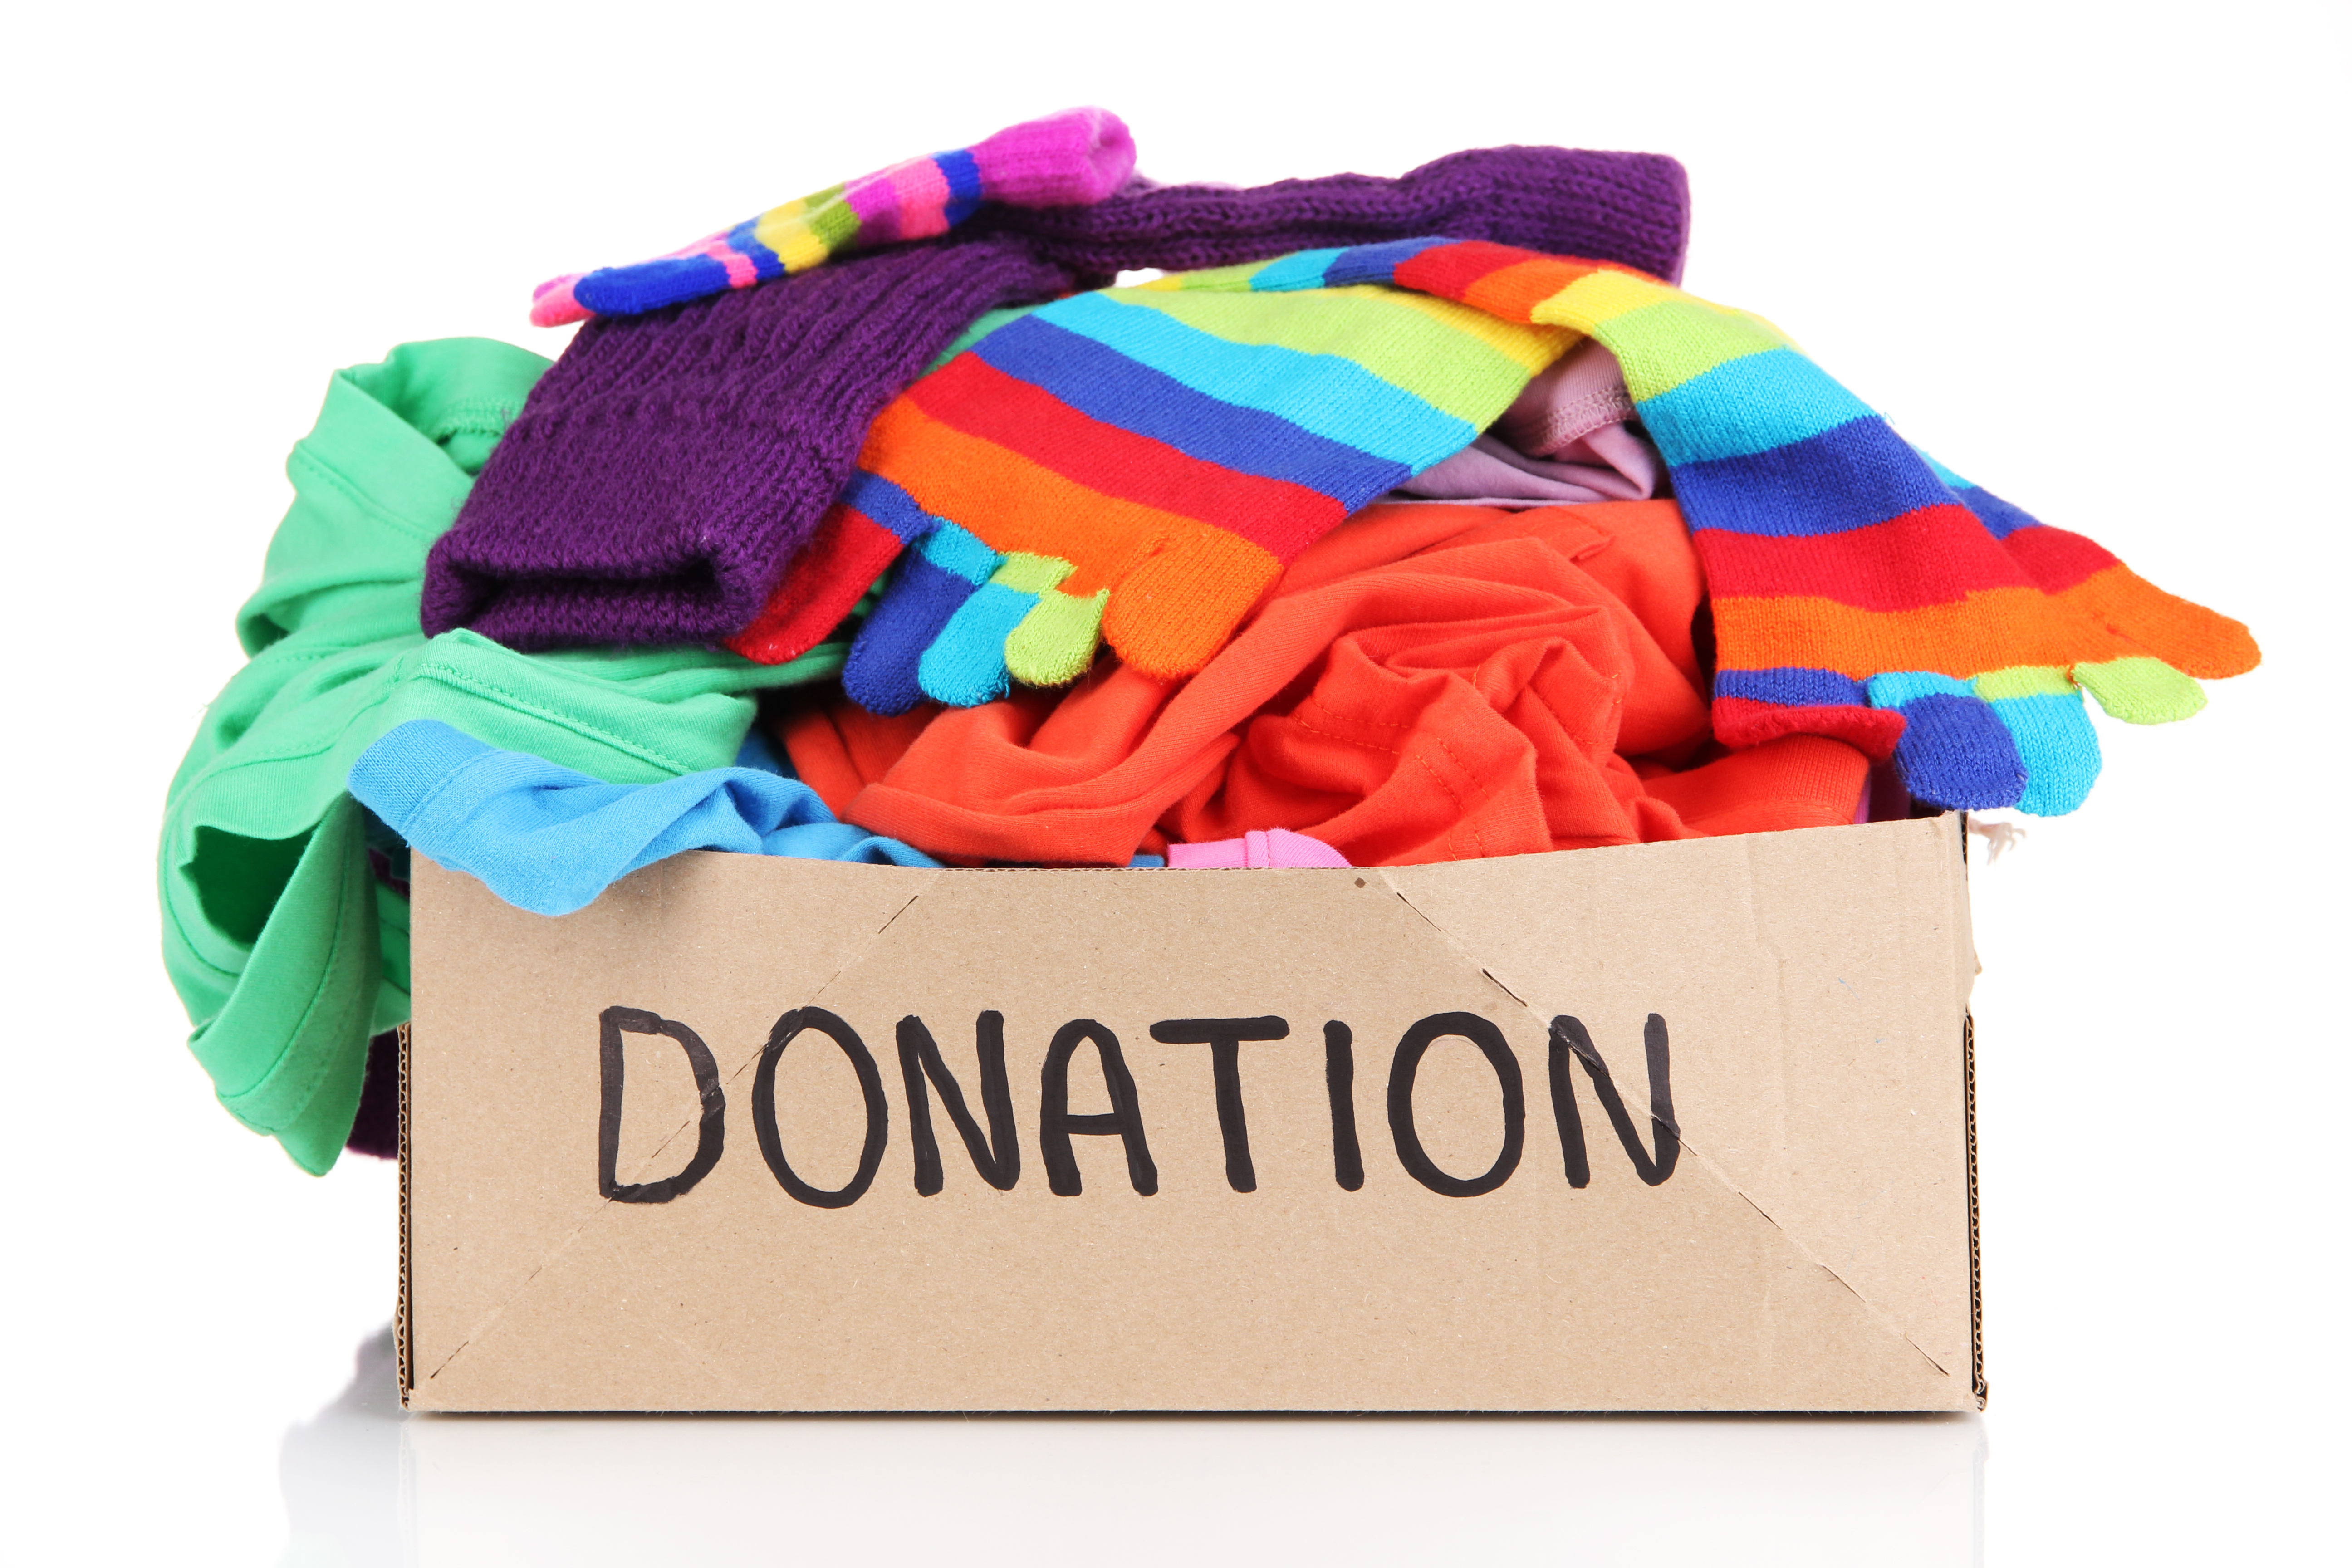 clothes donation clipart - photo #1